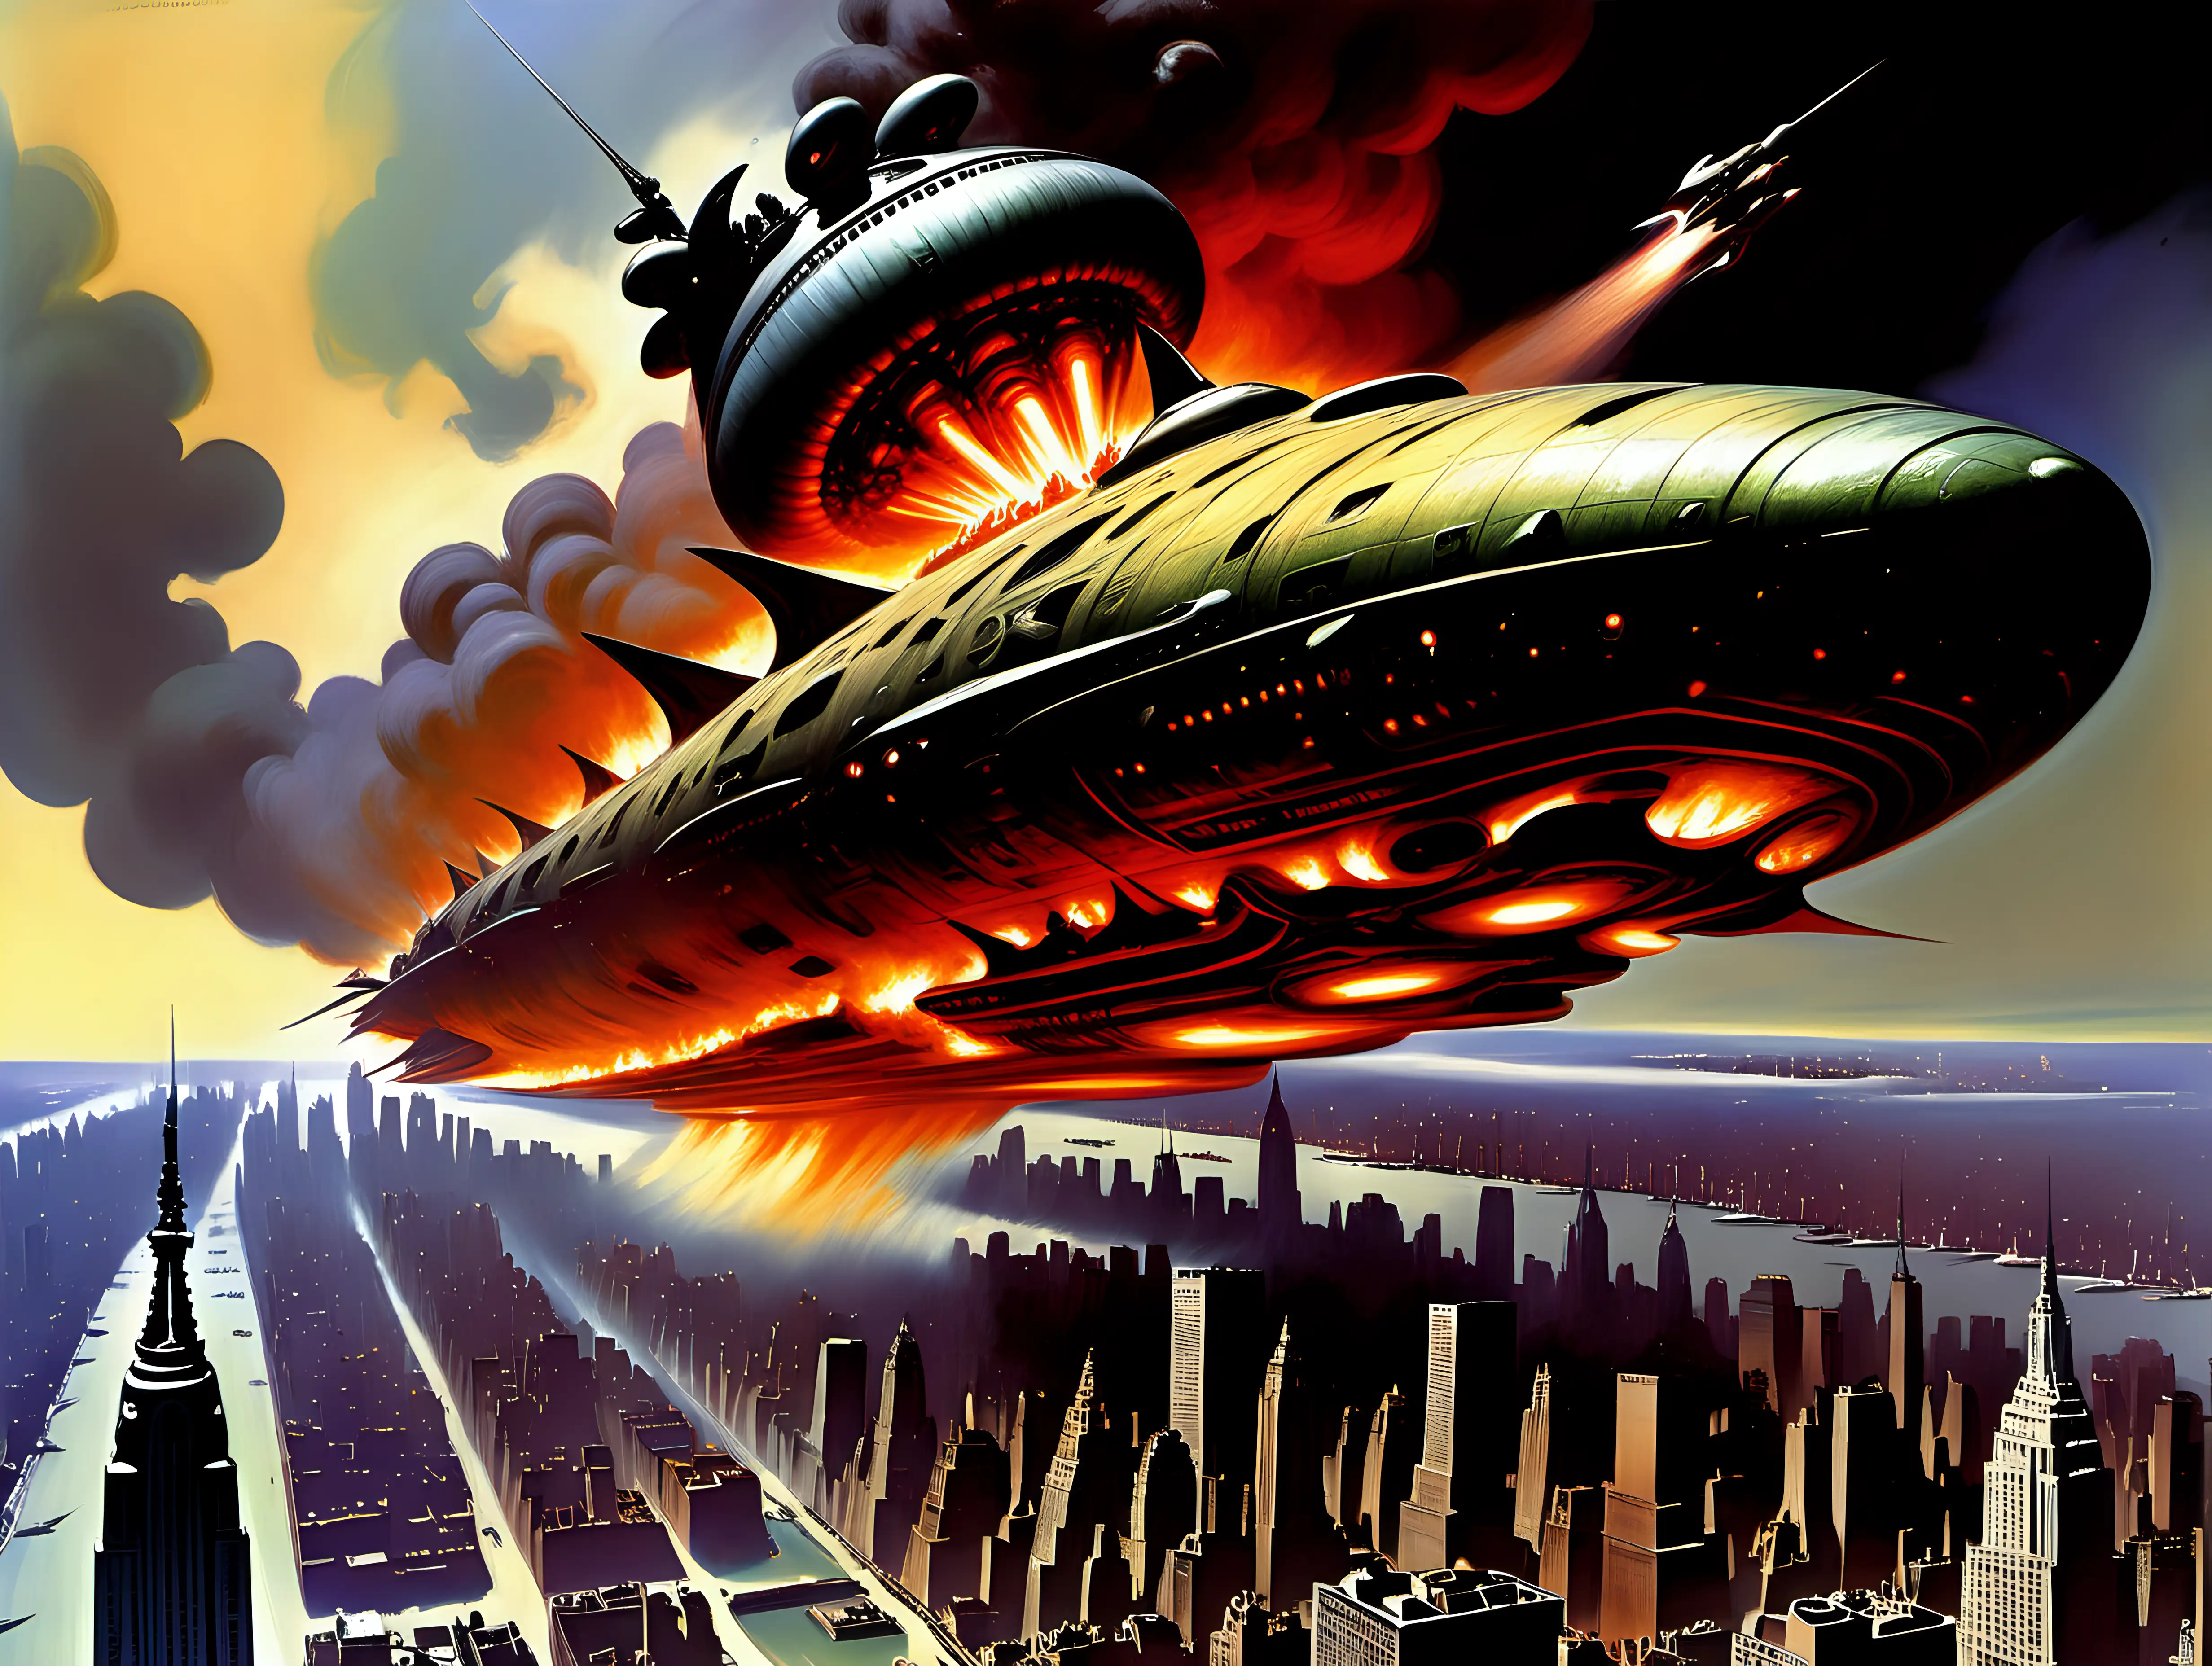 alien spacecraft attacking NYC on fire in 1940   Frank Frazetta style